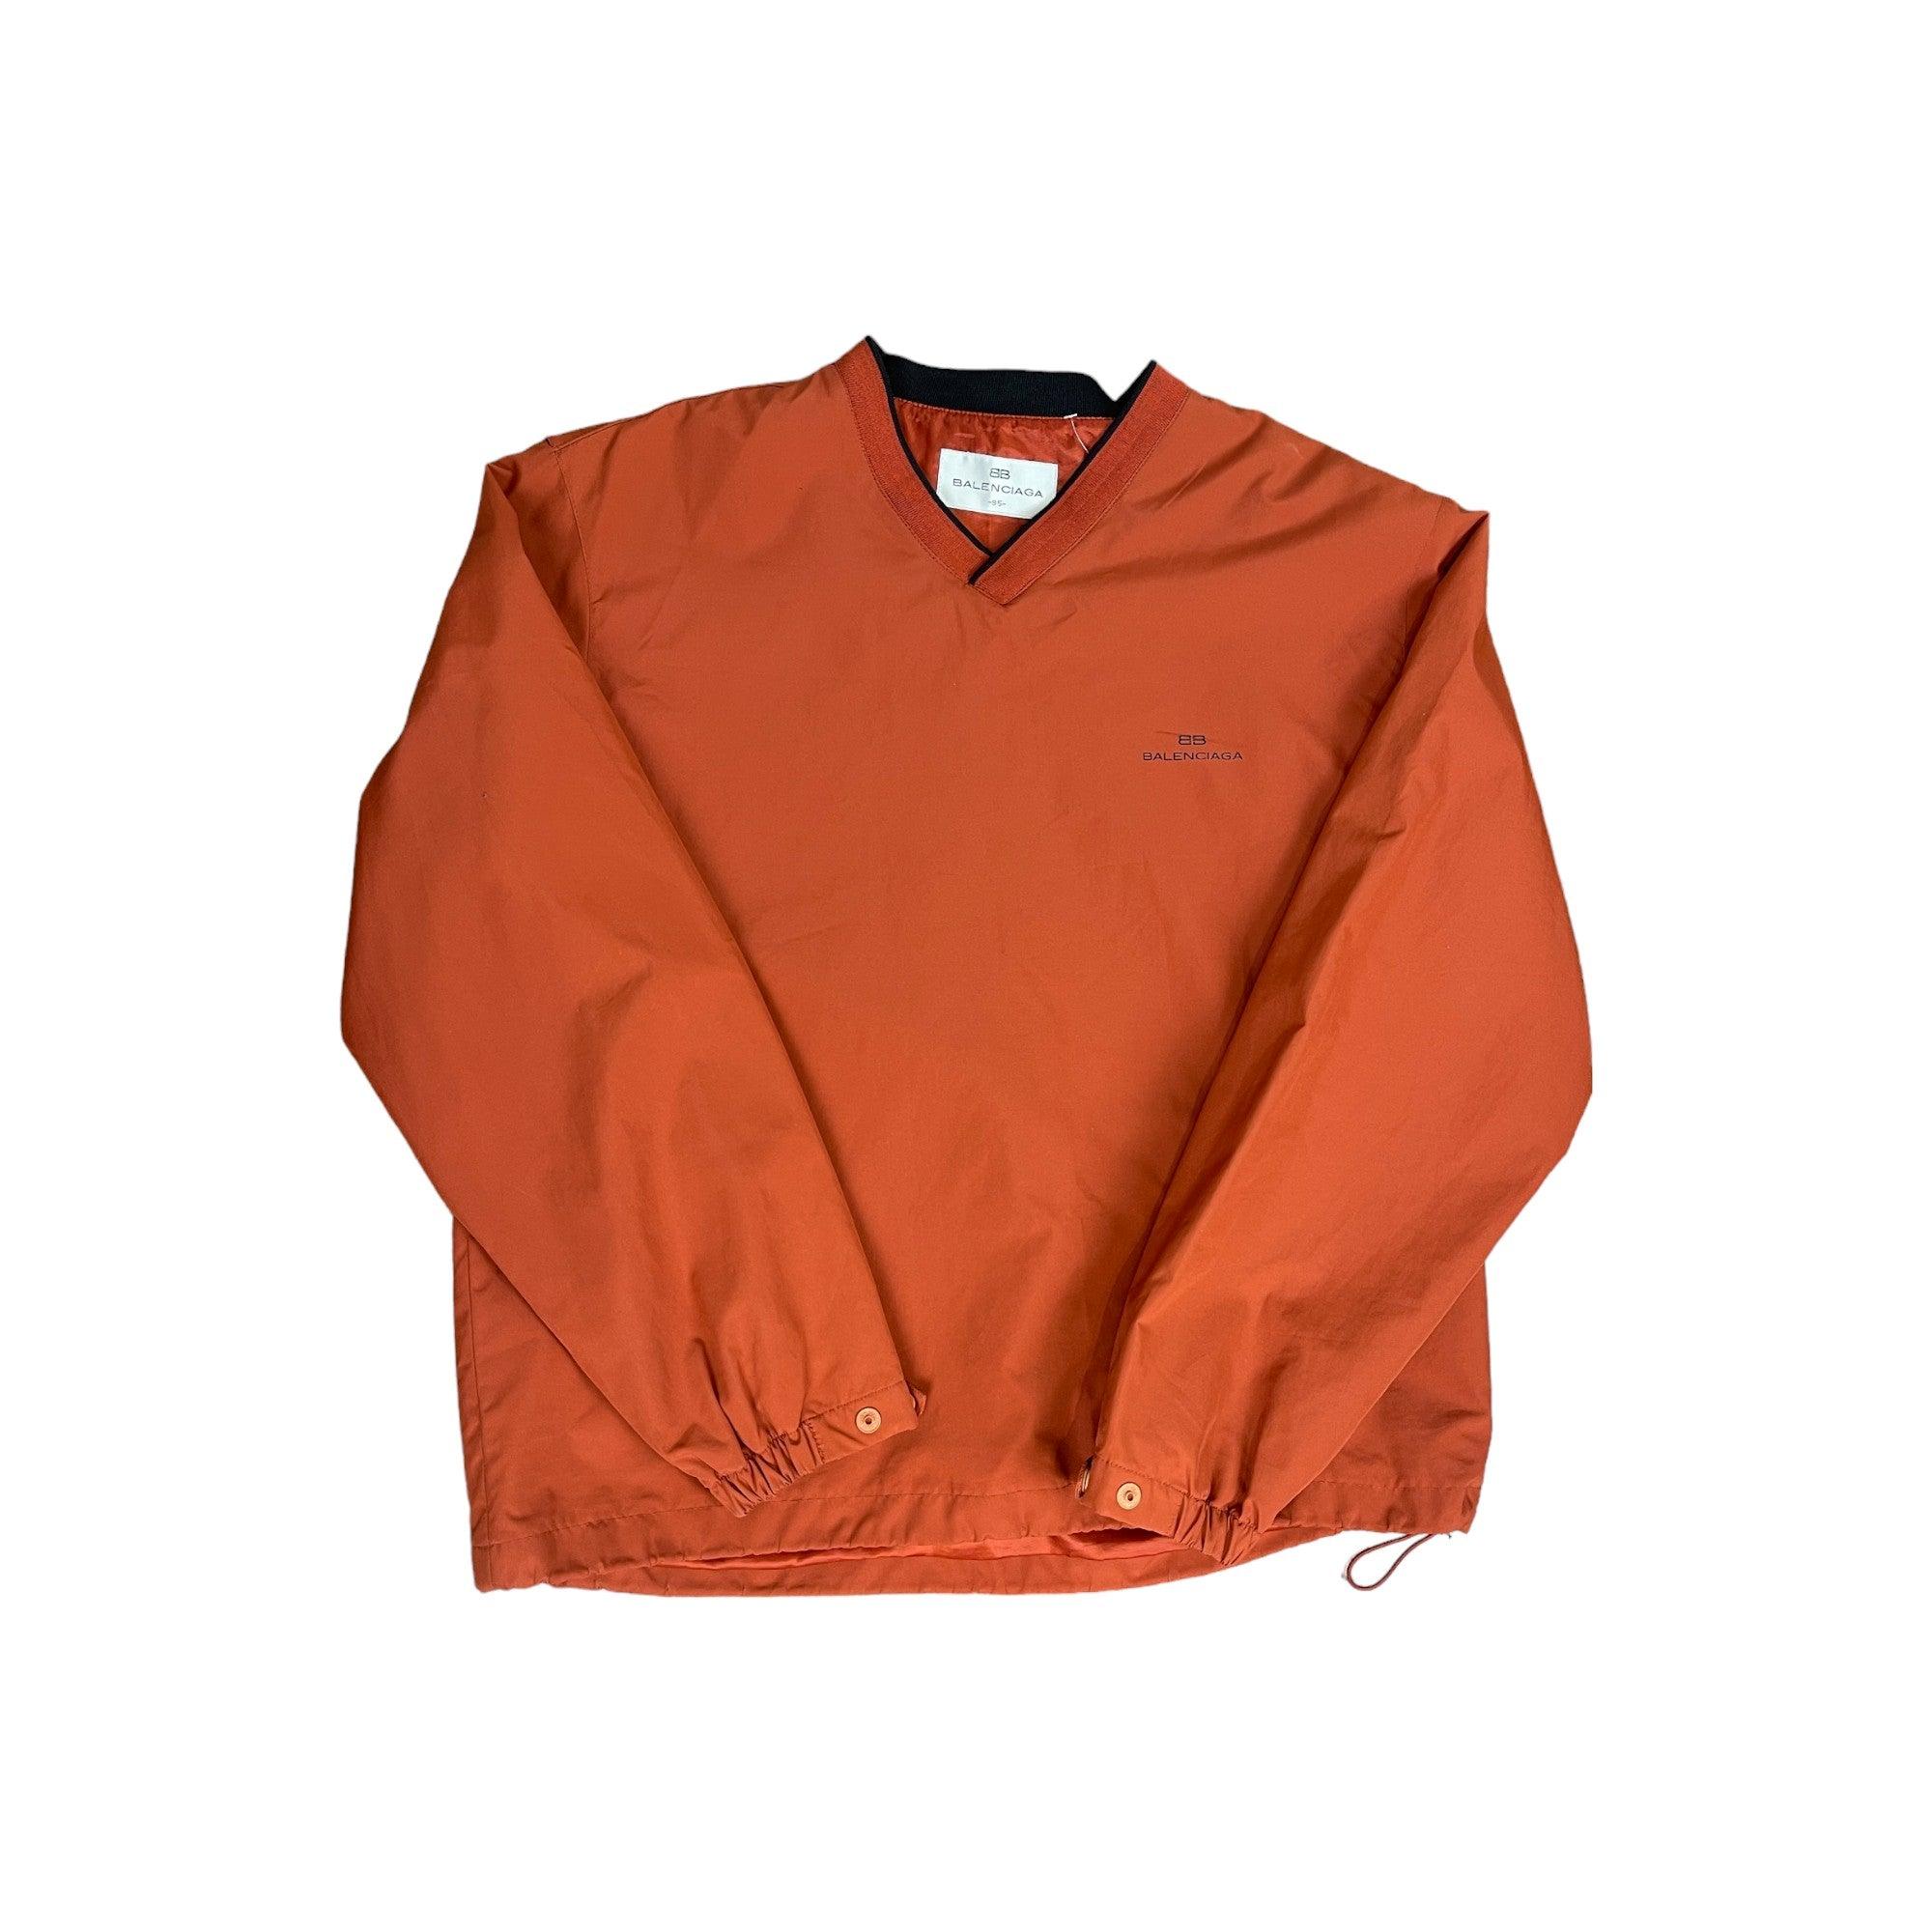 Vintage 90s Orange Balenciaga Sweatshirt - Medium - The Streetwear Studio